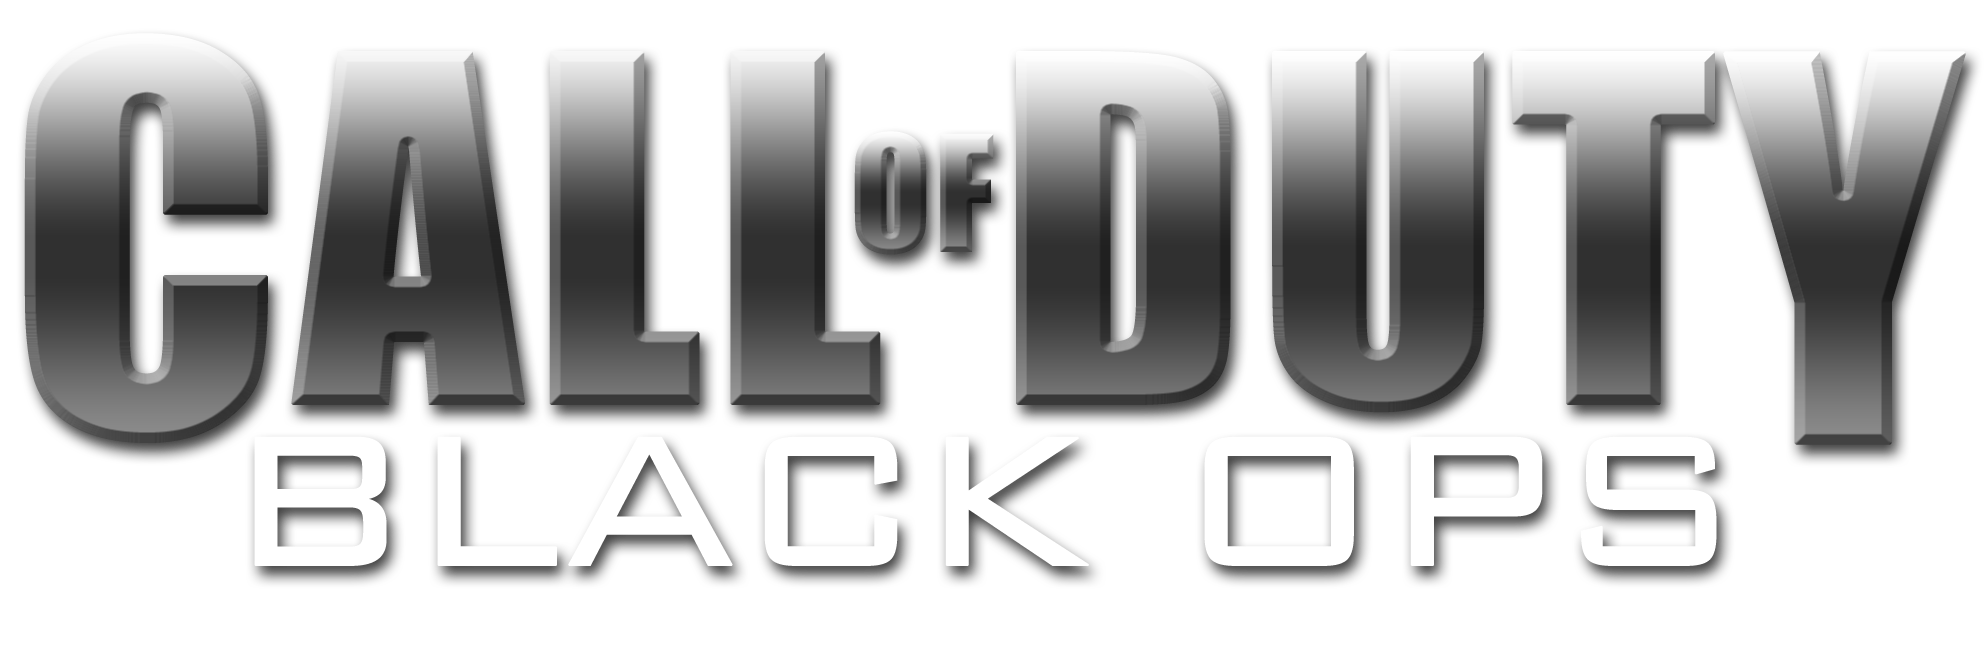 Call of Duty Black Ops PNG Прозрачное изображение